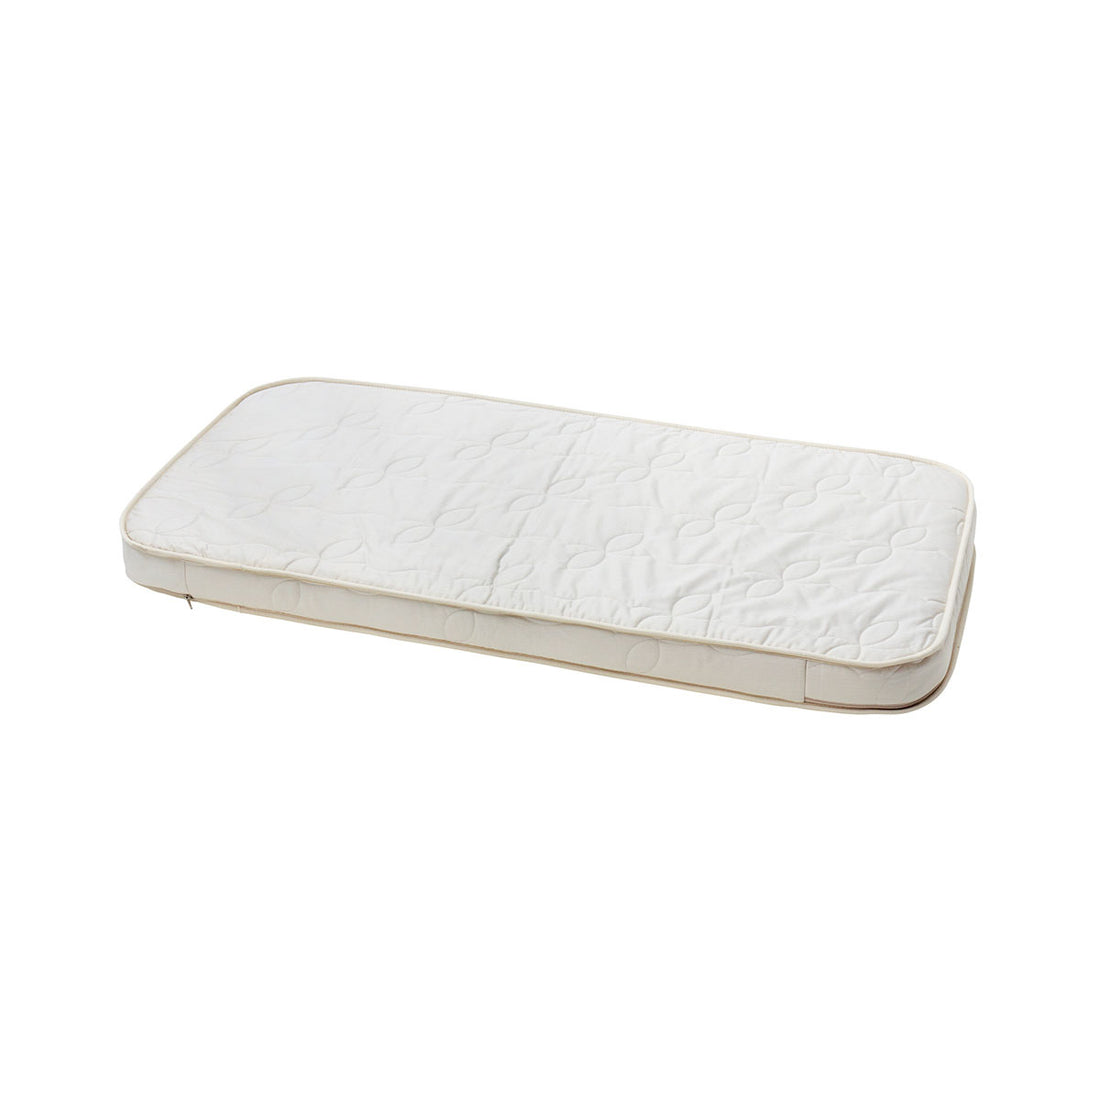 oliver-furniture-wood-cold-foam-mattress-for-cot- (1)